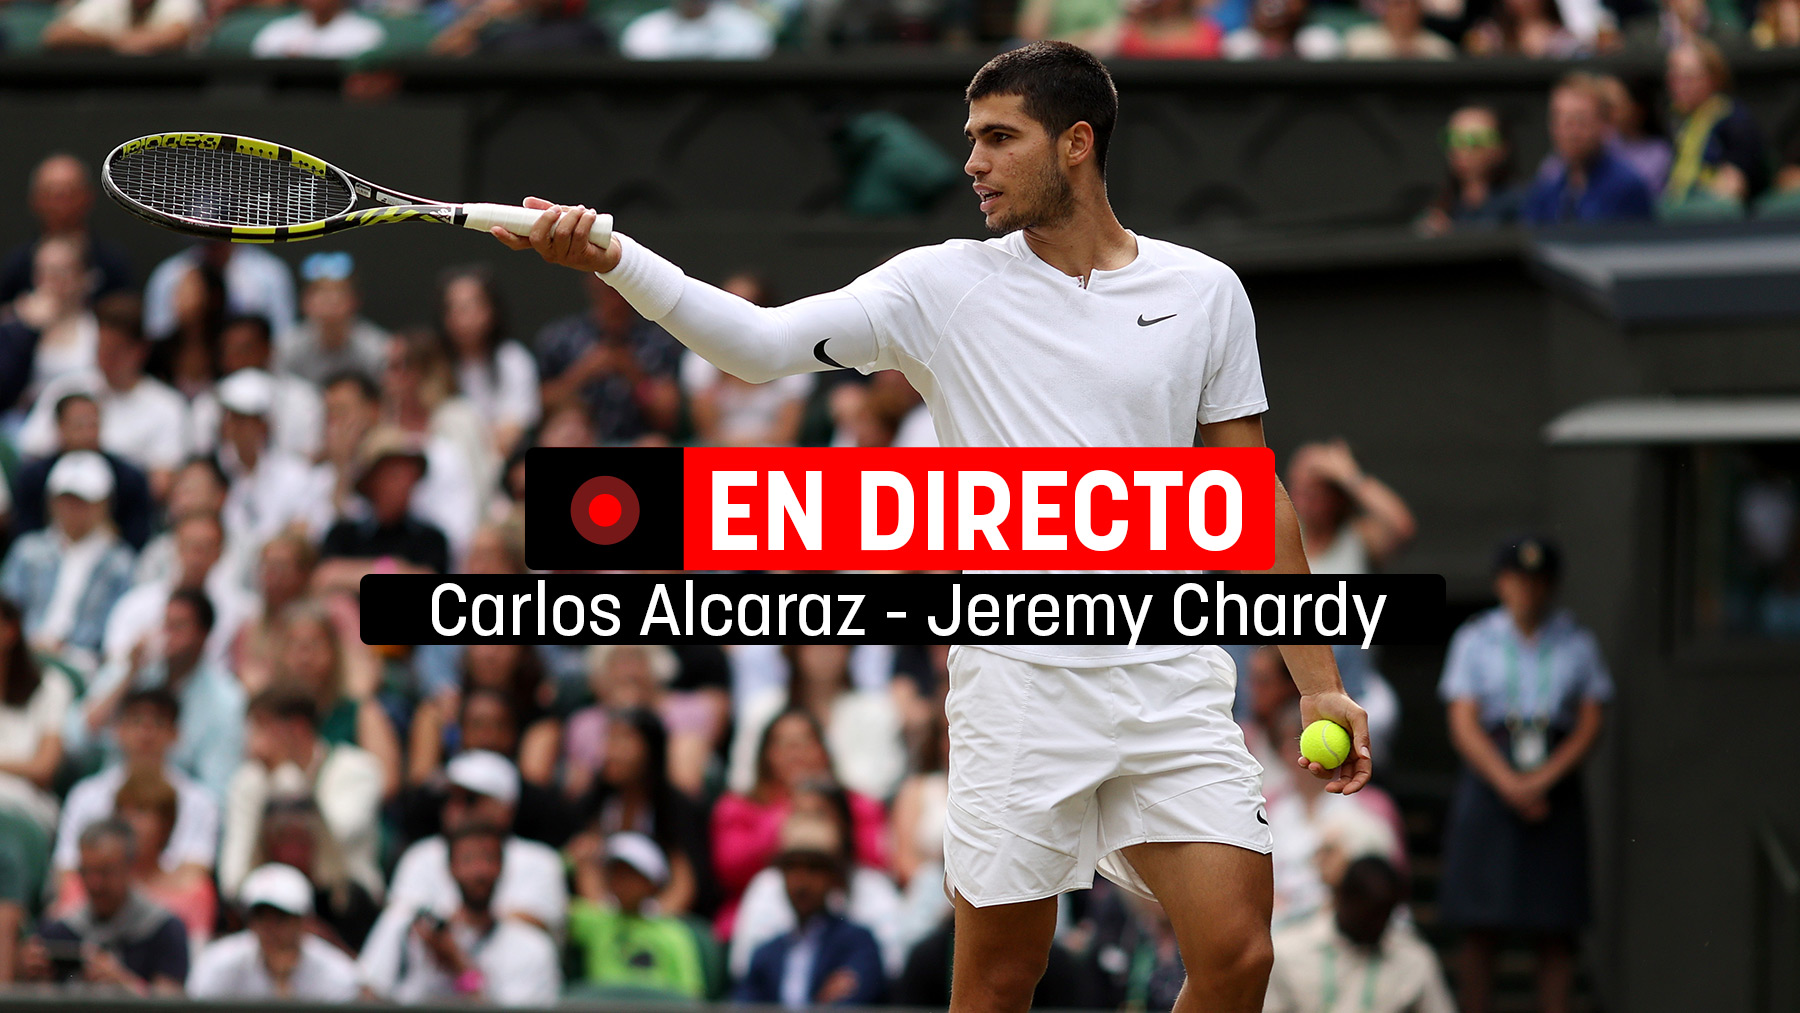 Carlos Alcaraz hoy en directo en Wimbledon